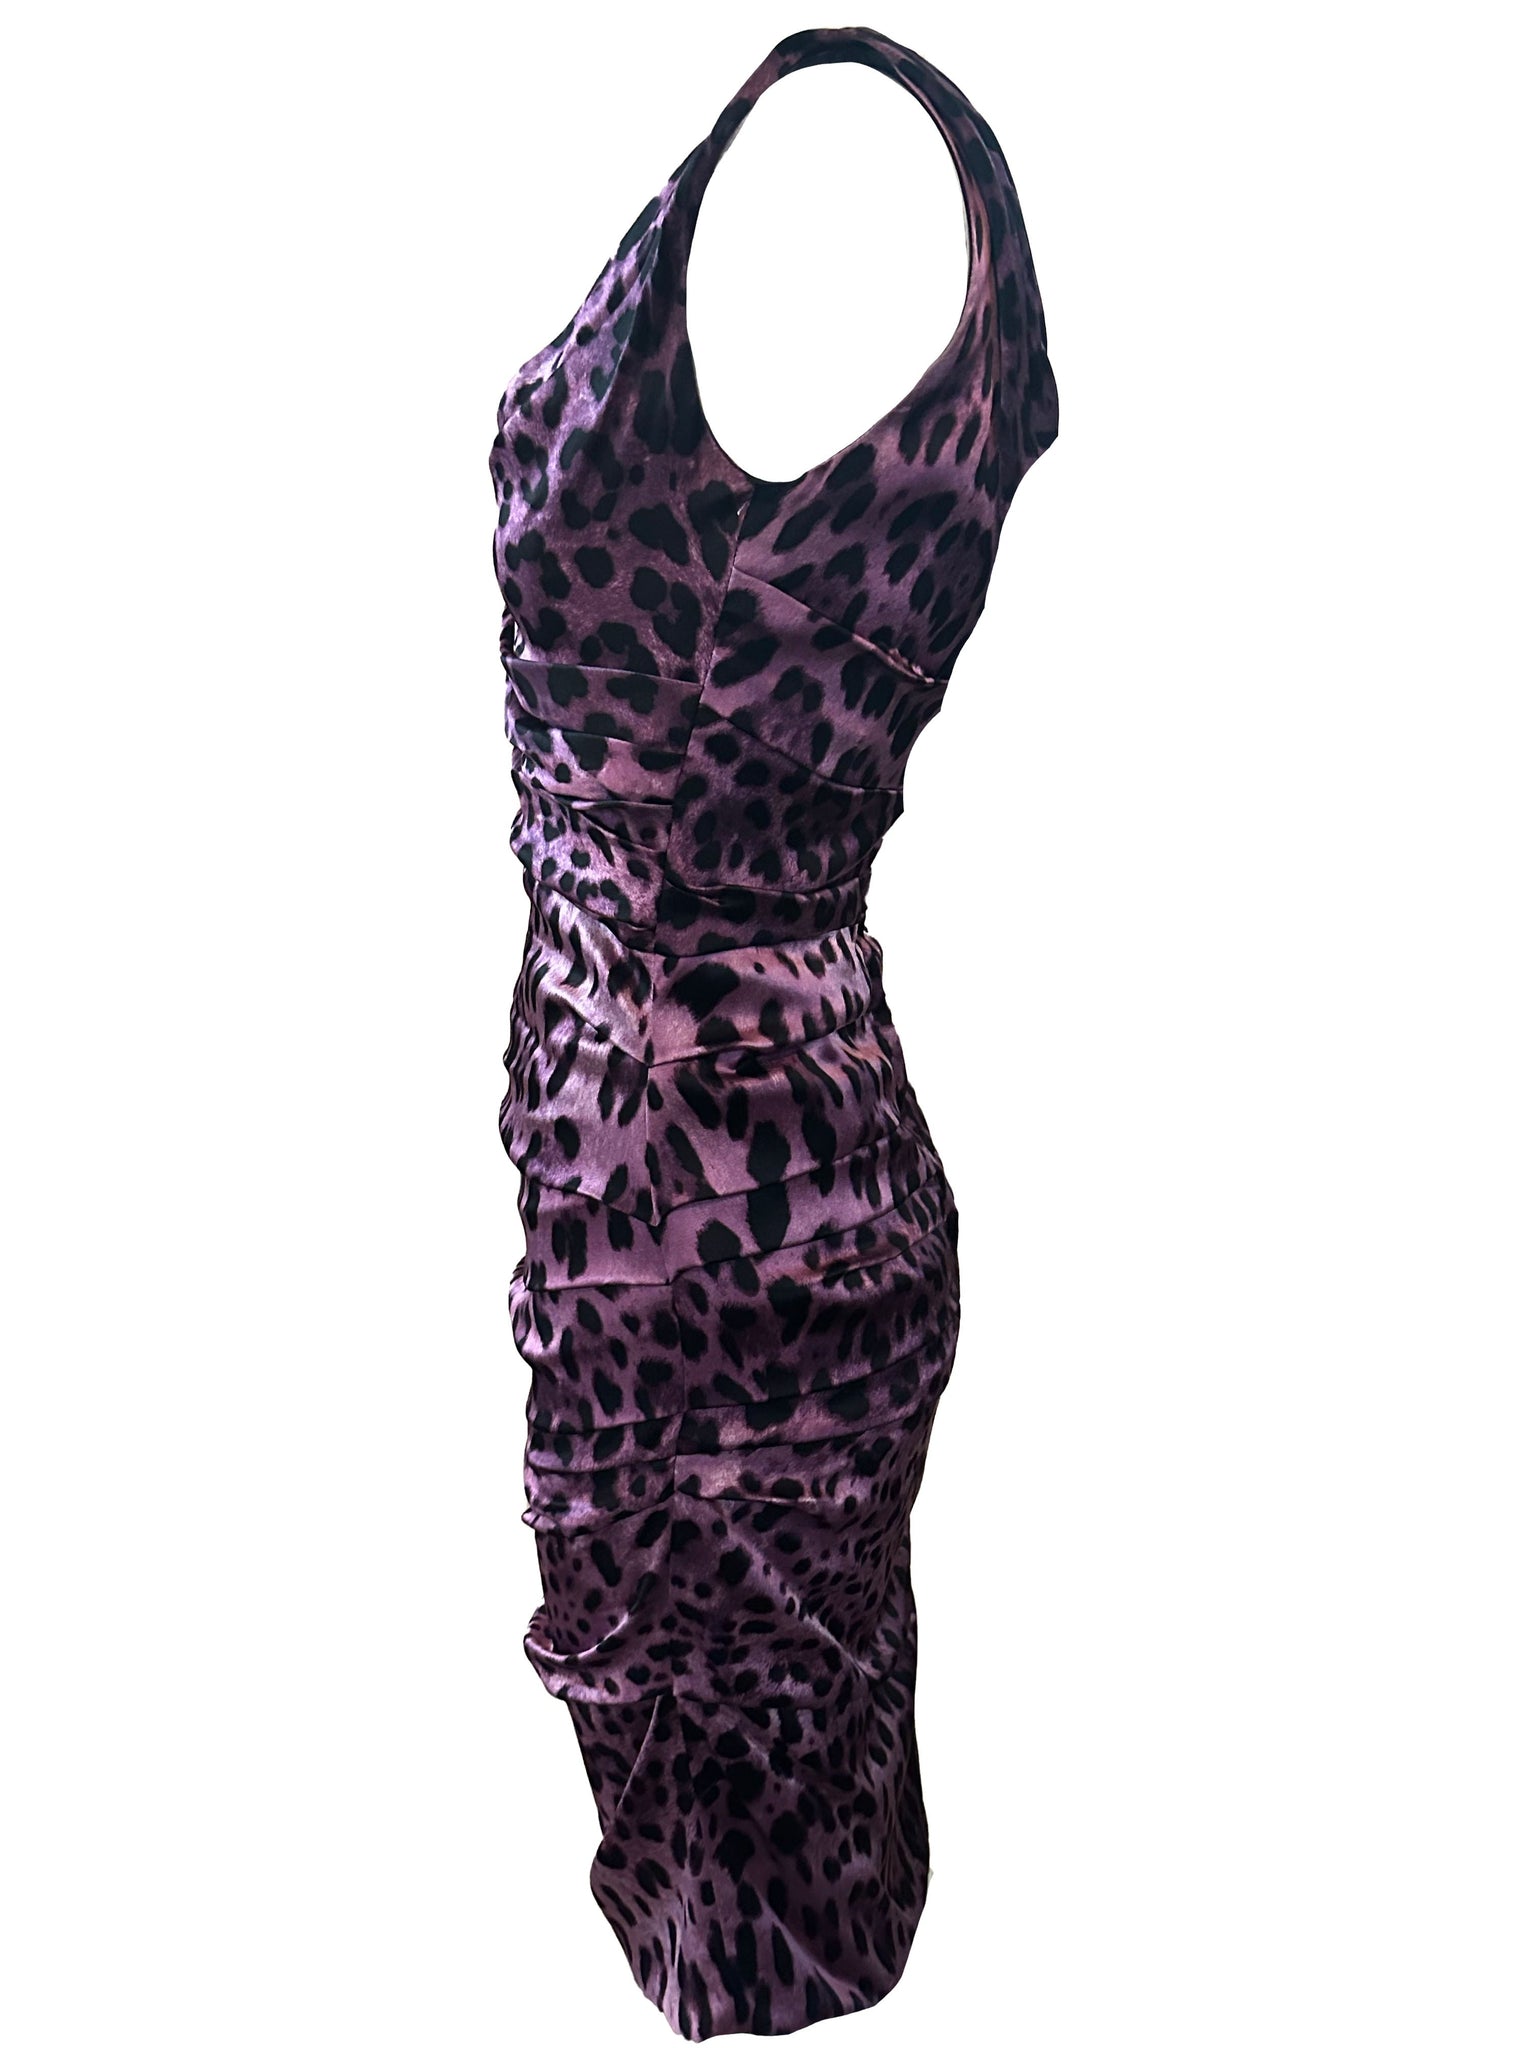 Dolce and Gabbana Y2K Purple Leopard Print Body Con Dress SIDE 2 of 5